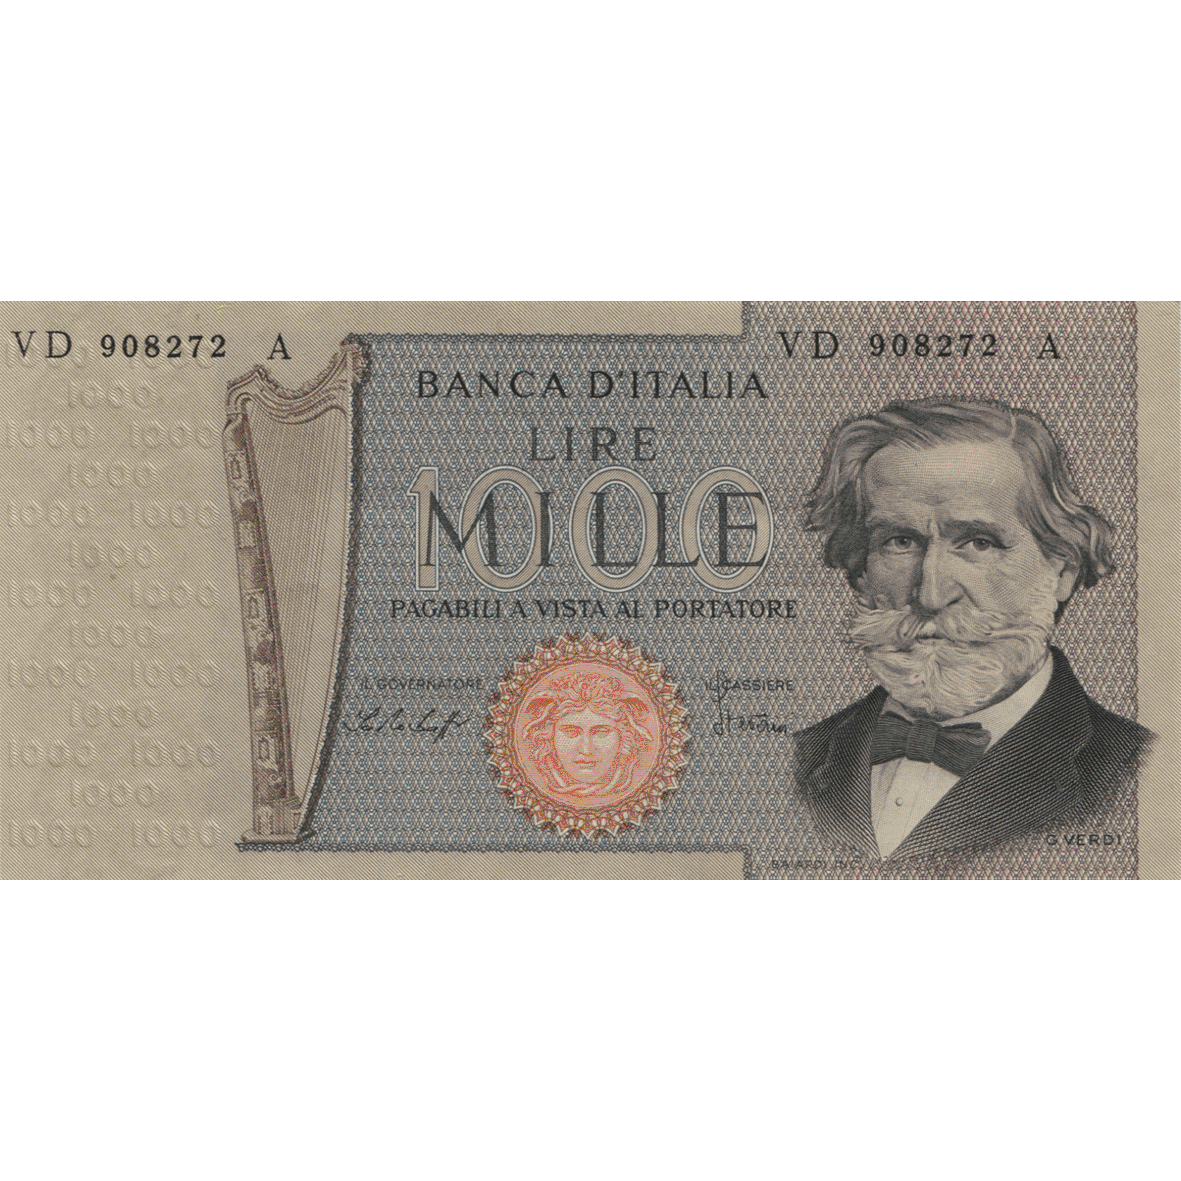 Republic of Italy, 100'000 Lire, in circulation 1967-1974 (obverse)